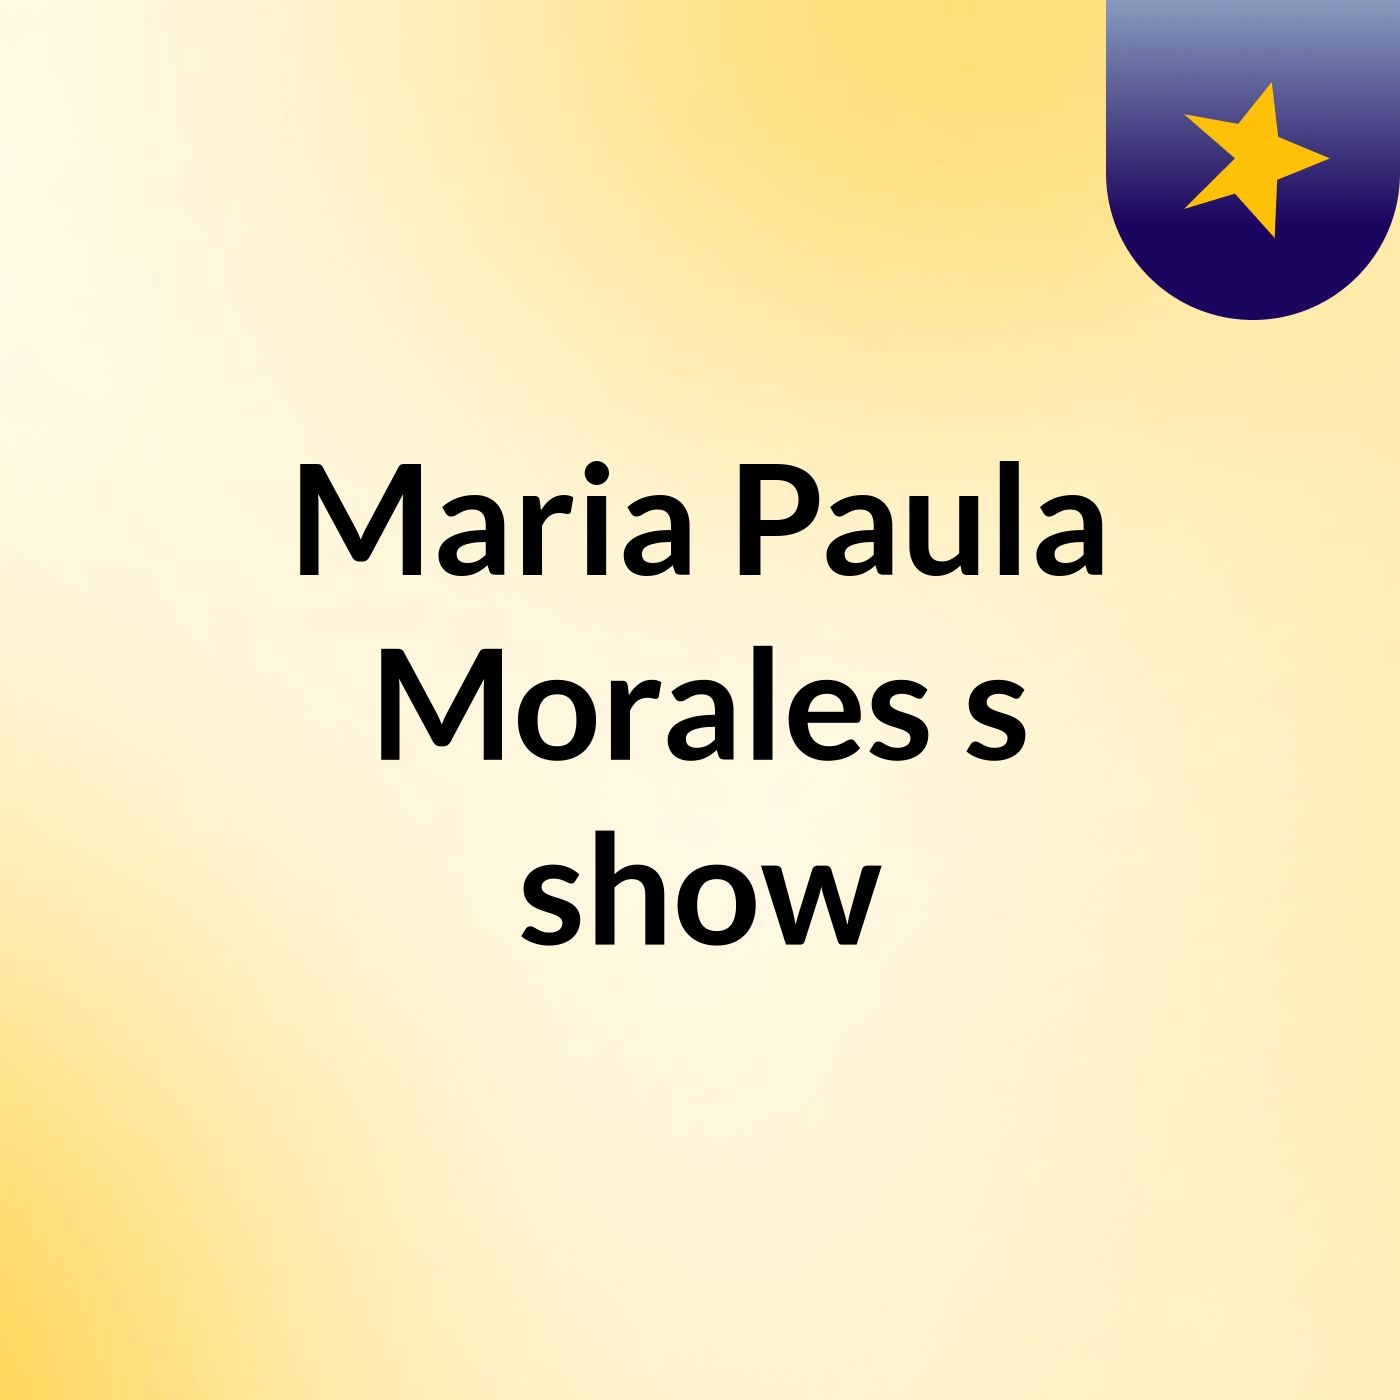 Maria Paula Morales's show